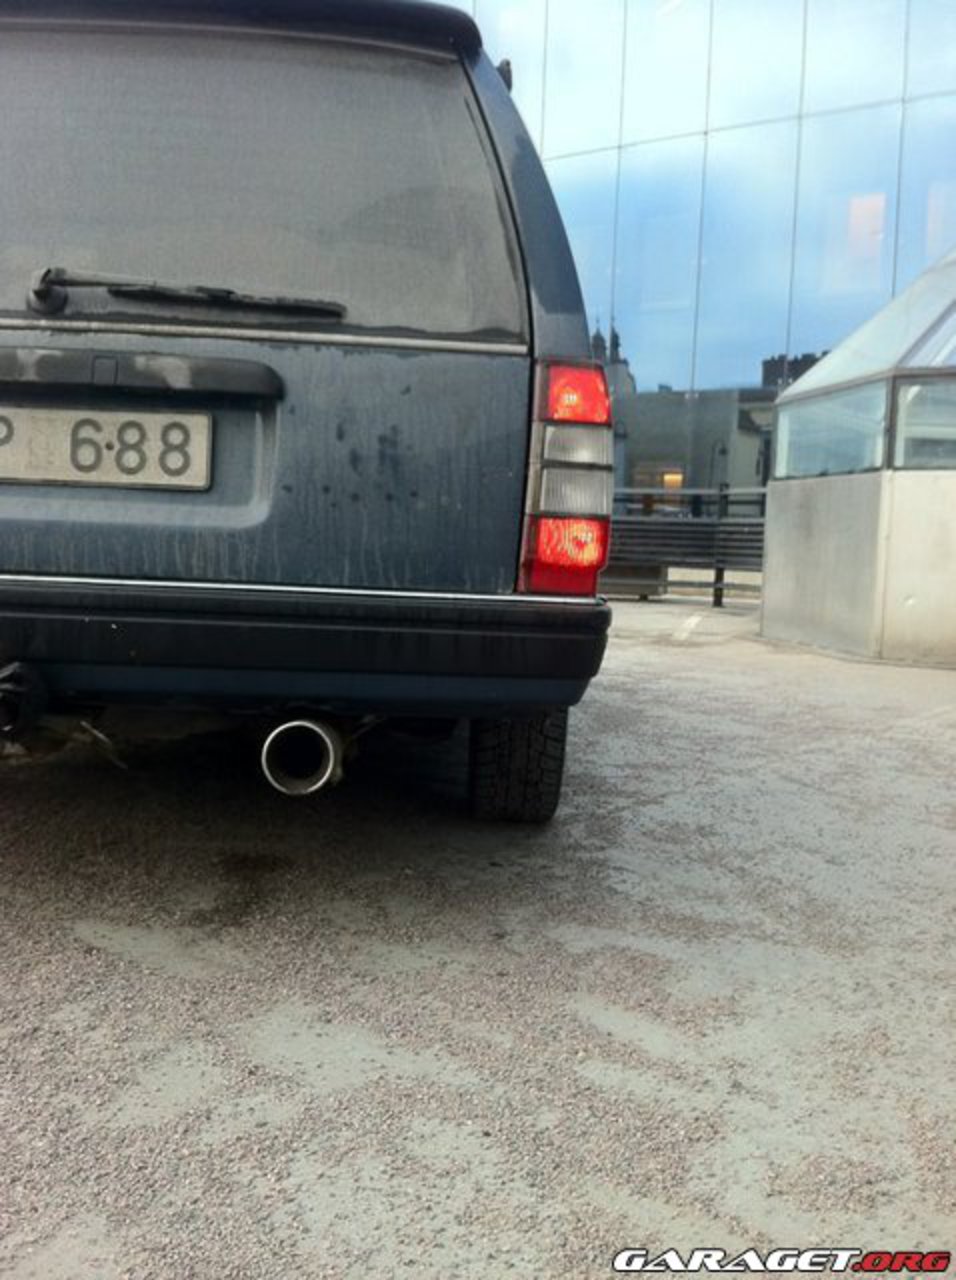 Volvo 765-697 GLE (1988) | Garaget